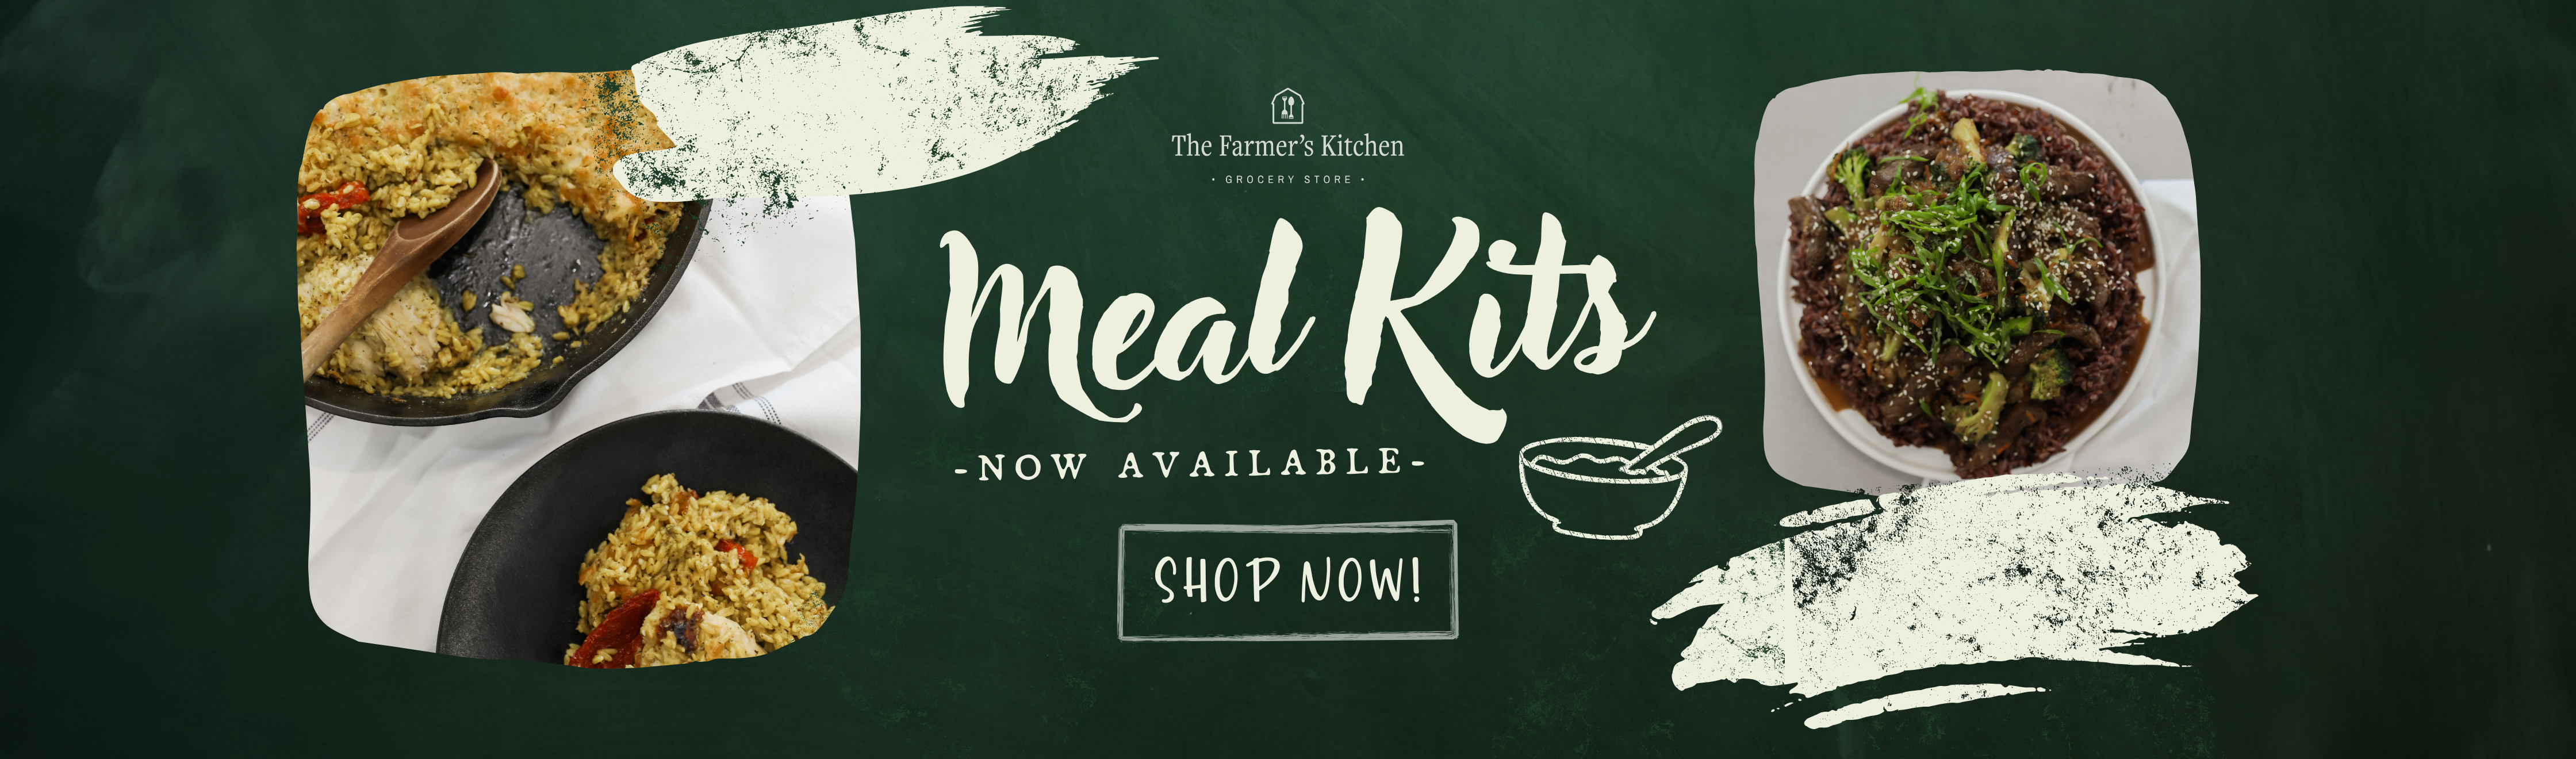 Farmers kitchen web banners 21